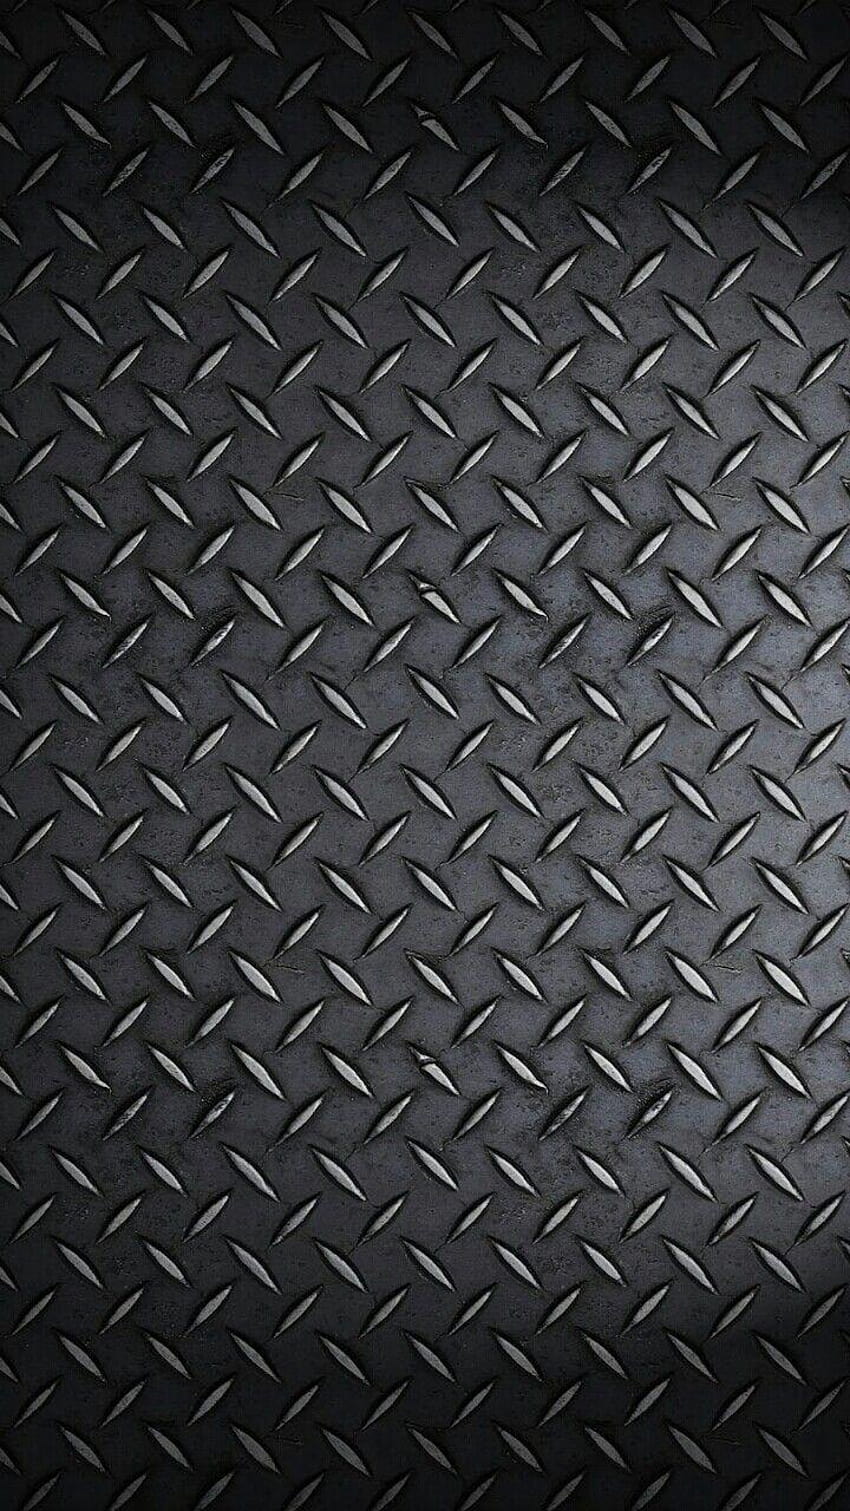 HD wallpaper grey diamond plate wallpaper metal pattern backgrounds  full frame  Wallpaper Flare